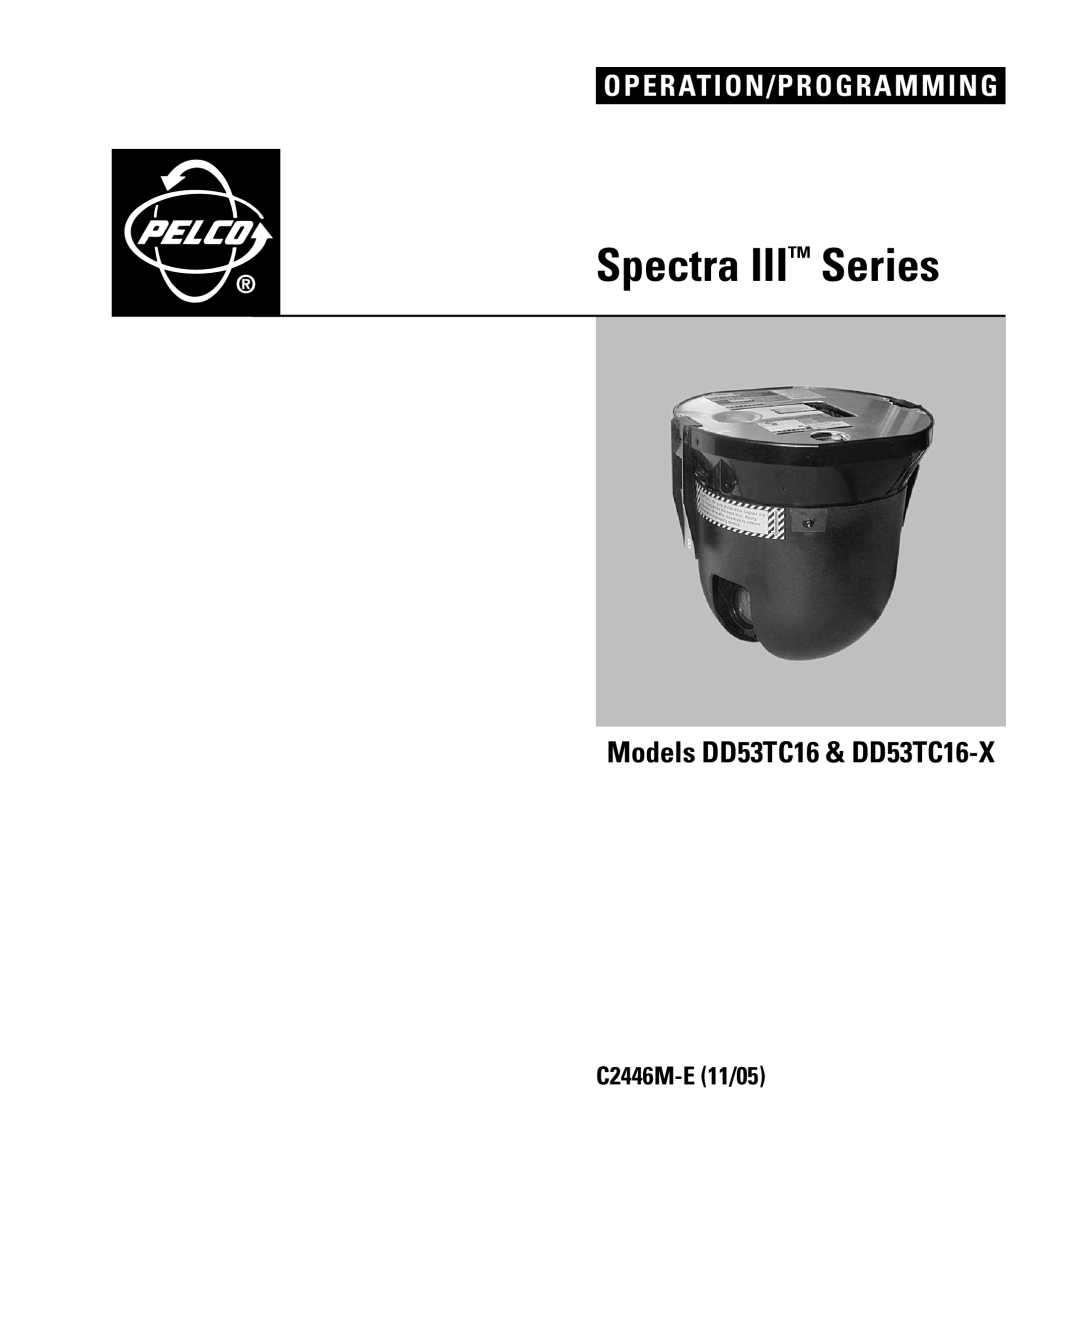 Pelco manual Spectra III Series, Models DD53TC16 & DD53TC16-X, O P E R At I O N / P R O G R A M M I N G, C2446M-E11/05 